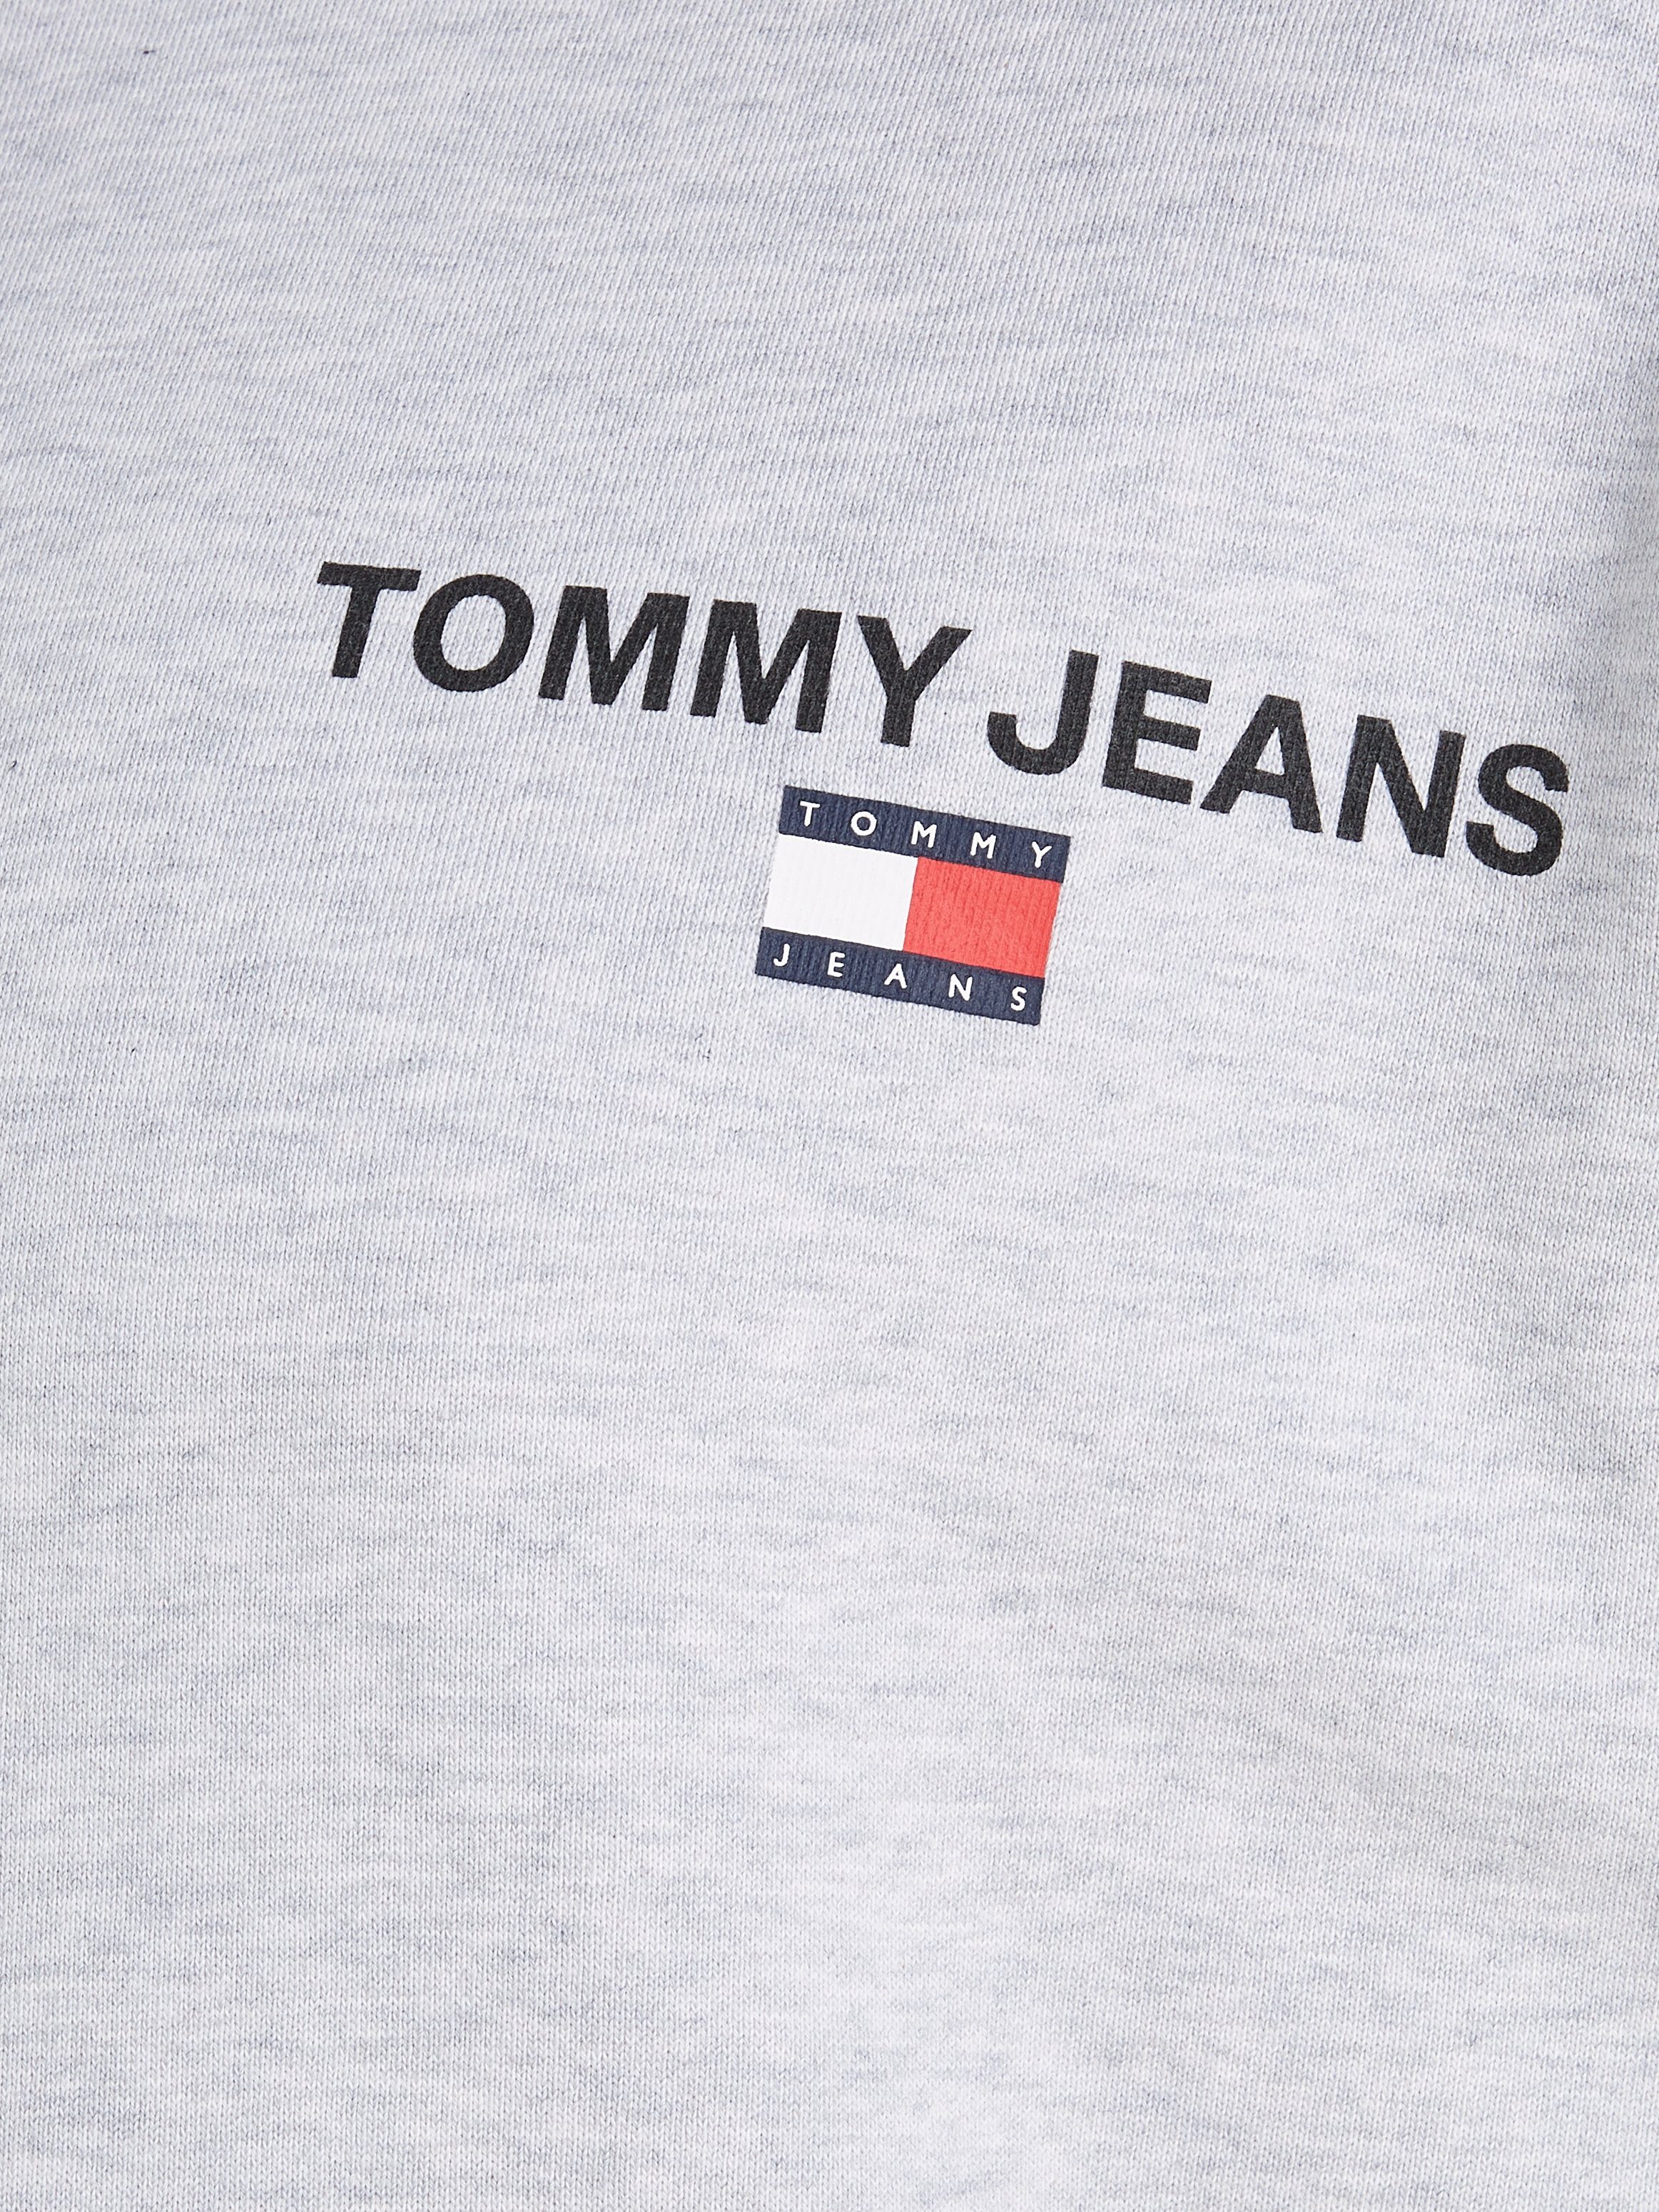 Tommy Jeans Plus Hoodie GRAPHIC PLUS Htr ENTRY REG TJM HOOD Silver Grey